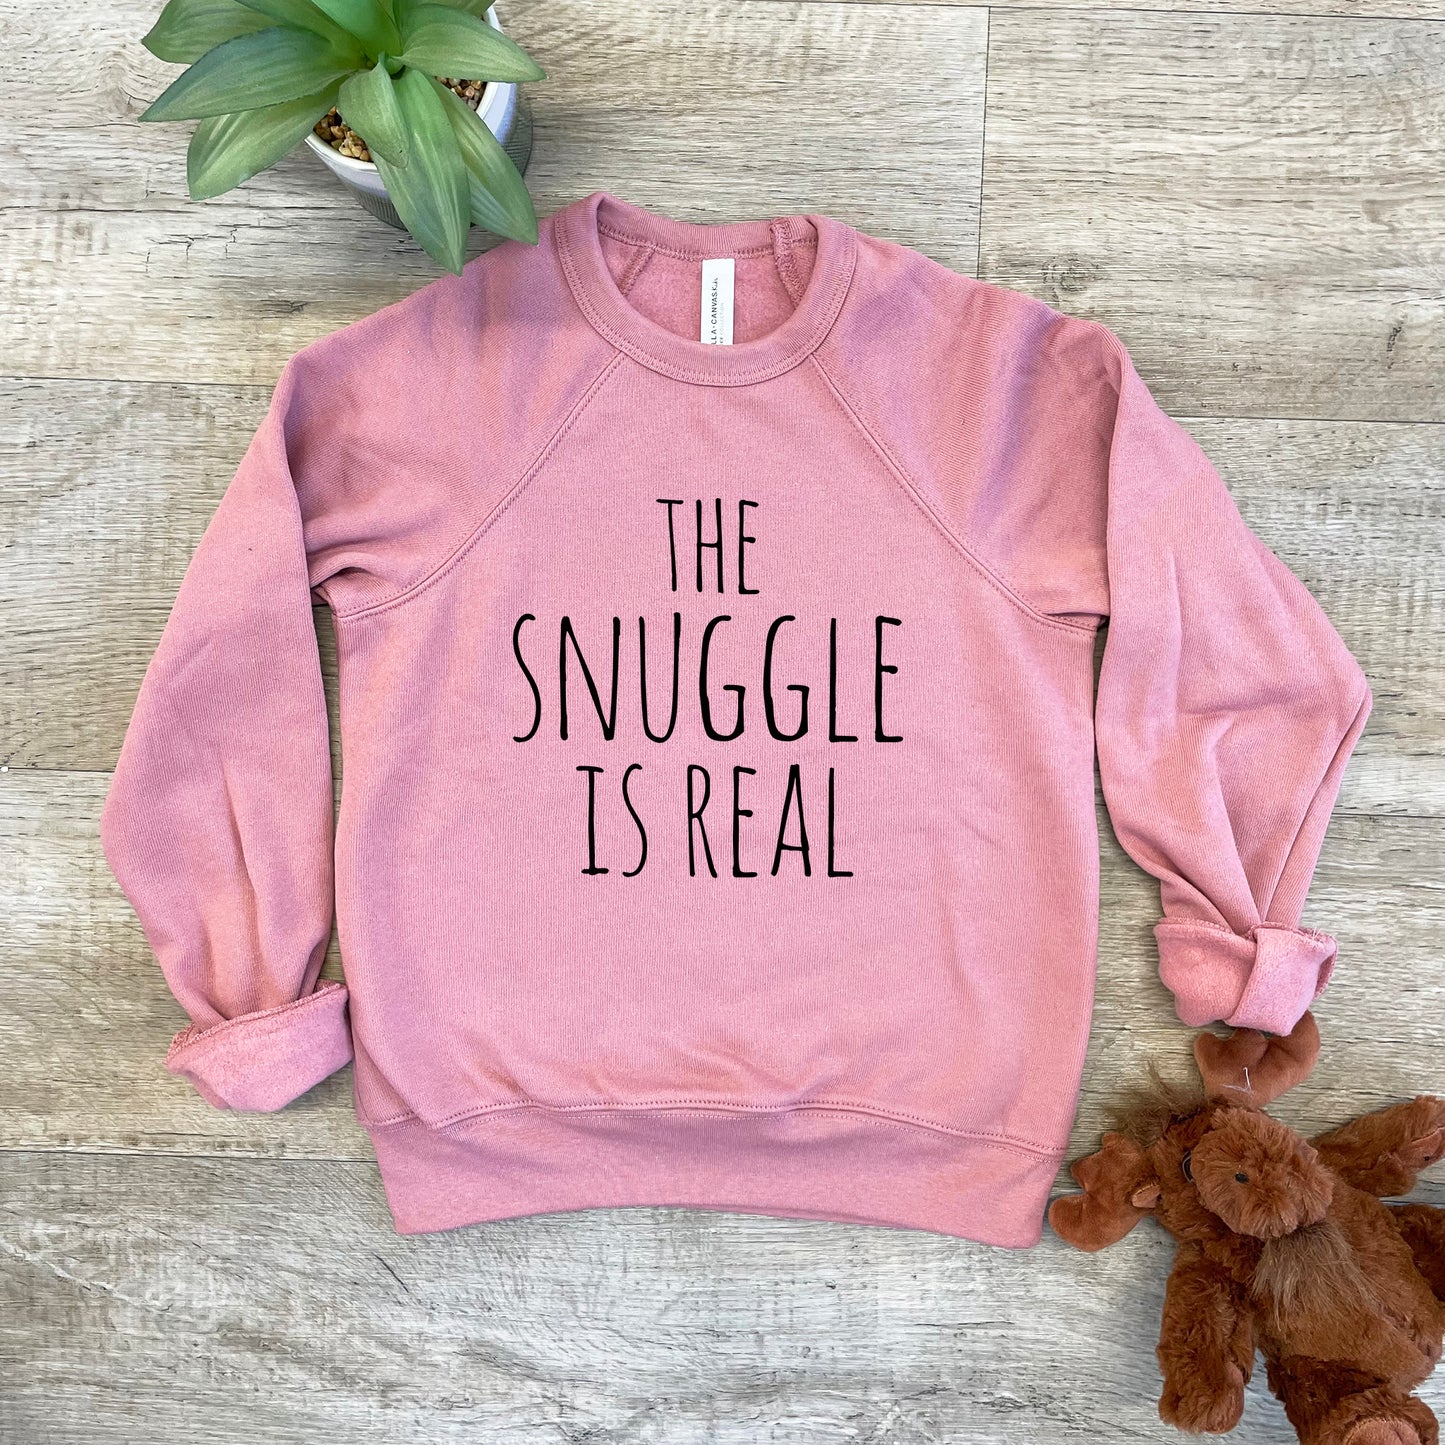 The Snuggle Is Real (Kids) - Kid's Sweatshirt - Heather Gray or Mauve